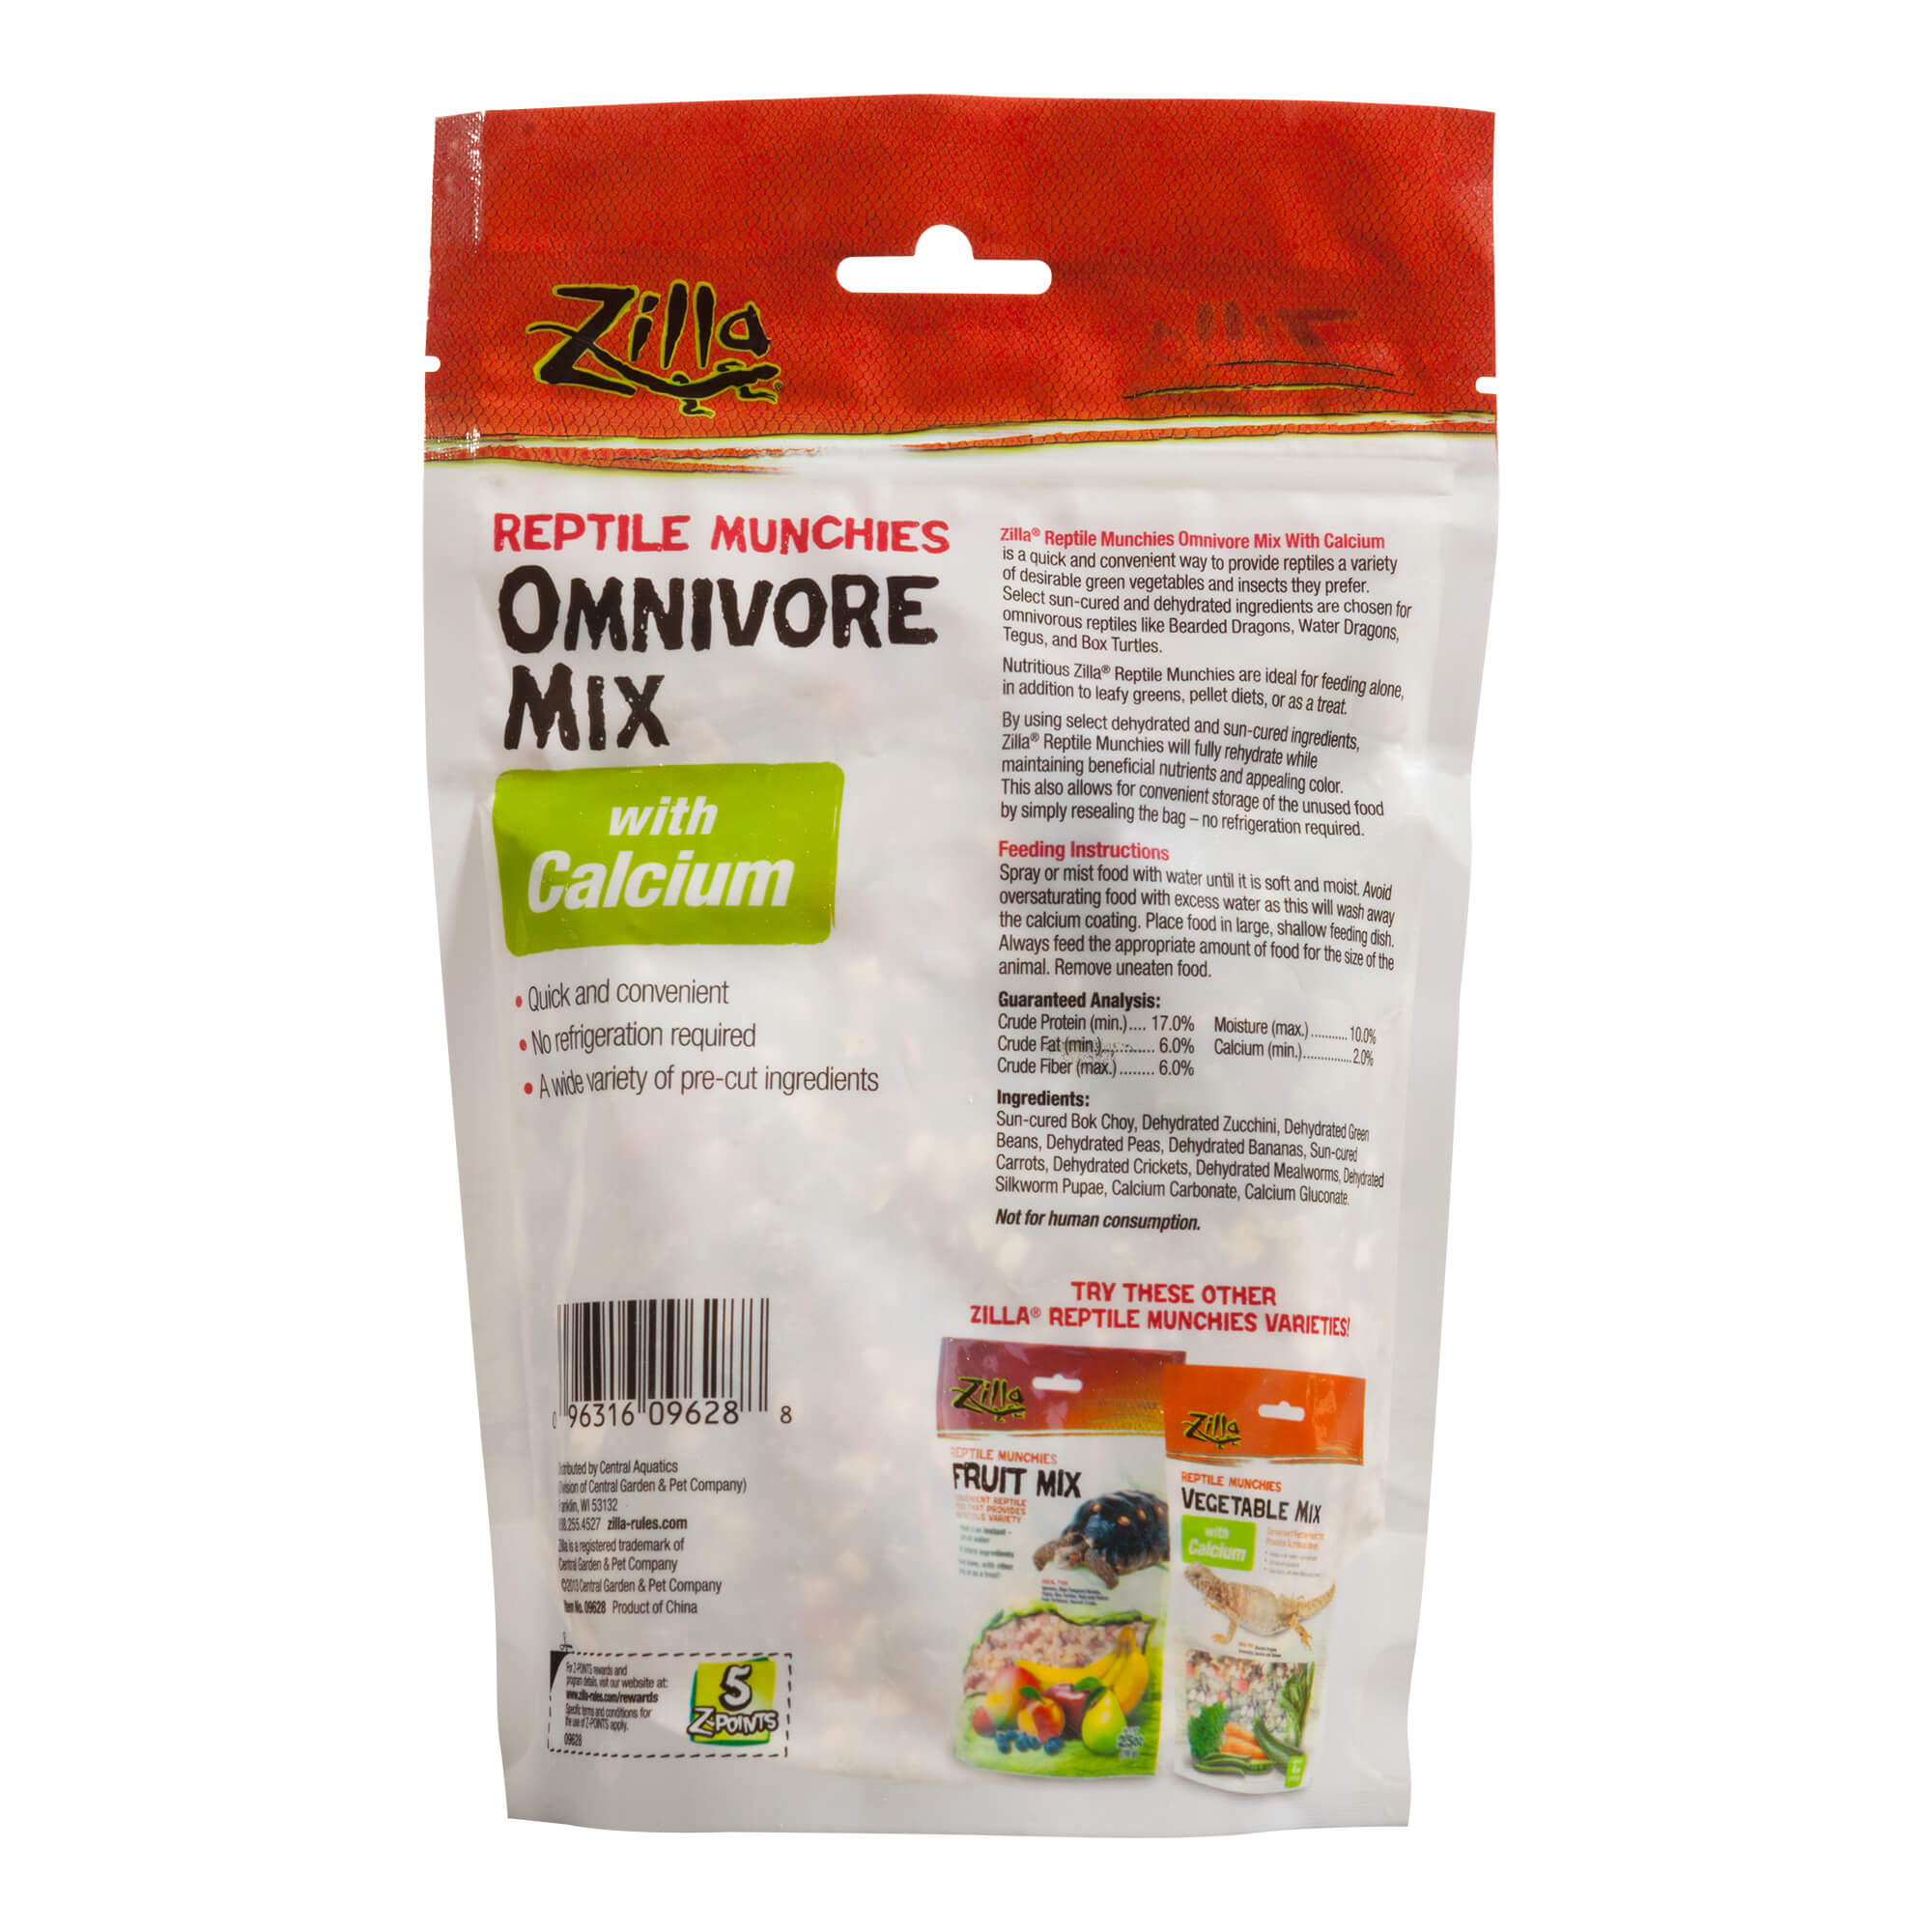 Zilla Omnivore Mix Reptile Munchies with Calcium Ingredients List